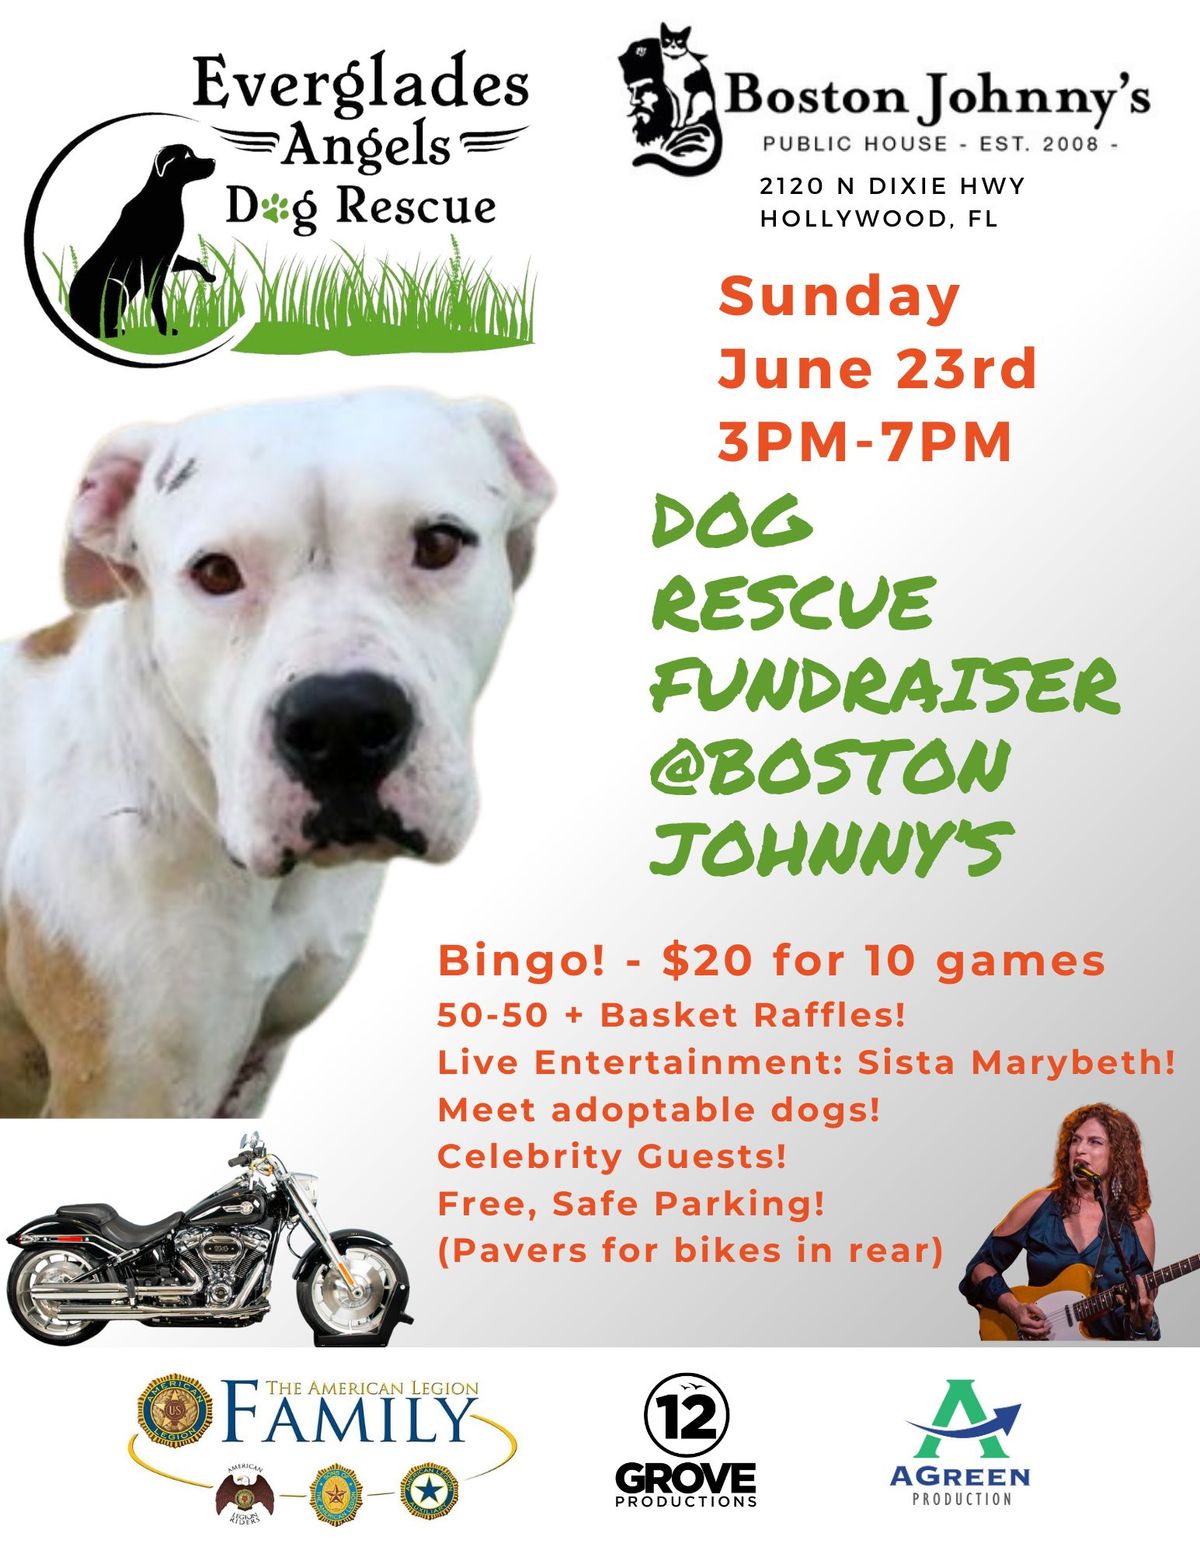 Fundraiser - Everglades Angels Dog Rescue - Sunday June 23 3-7PM @Boston Johnny's